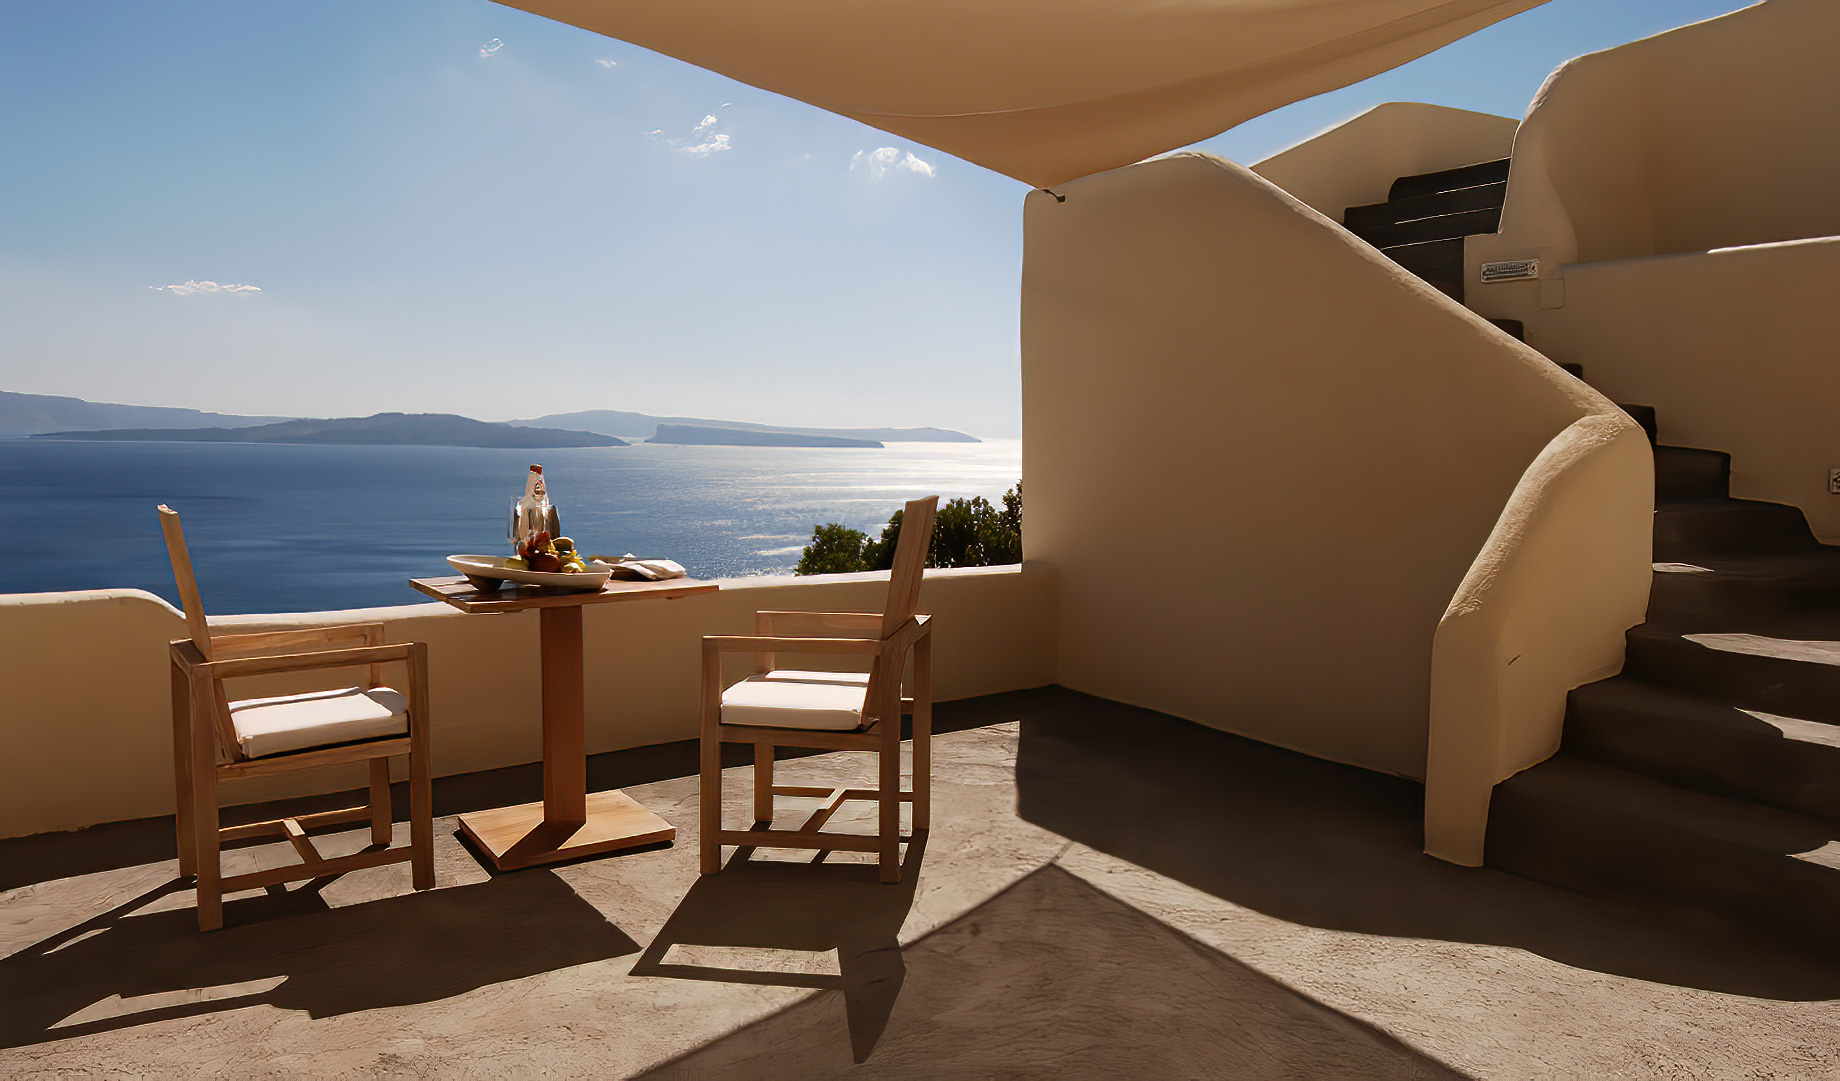 Mystique Hotel Santorini – Oia, Santorini Island, Greece – Clifftop Ocean View Covered Deck